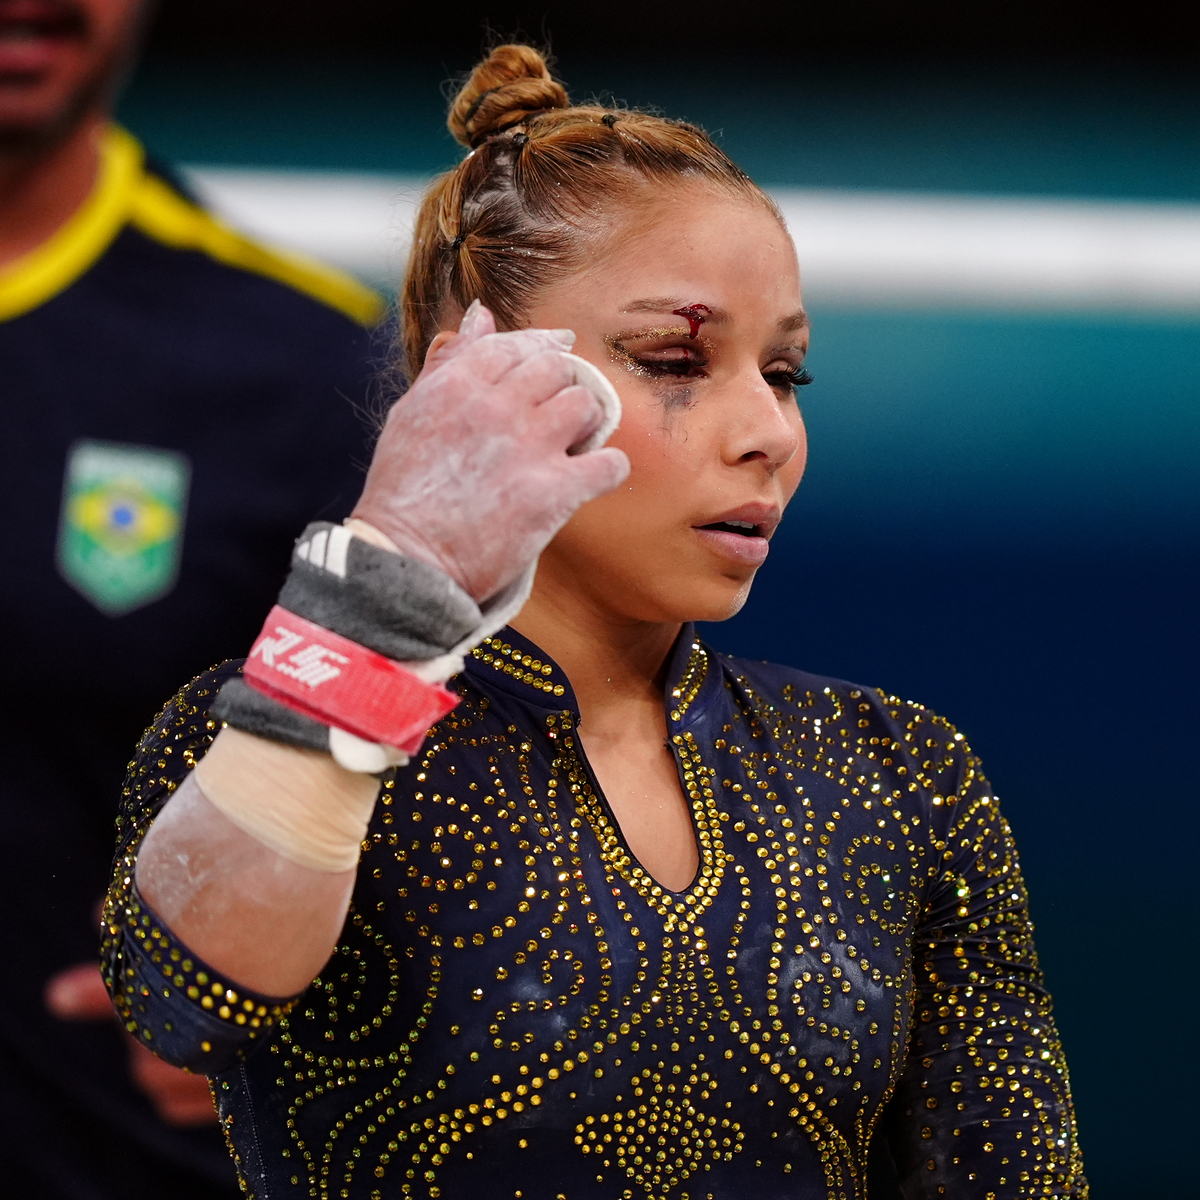 Brazilian Gymnast Flavia Saraiva Competes With Black Eye After Fall